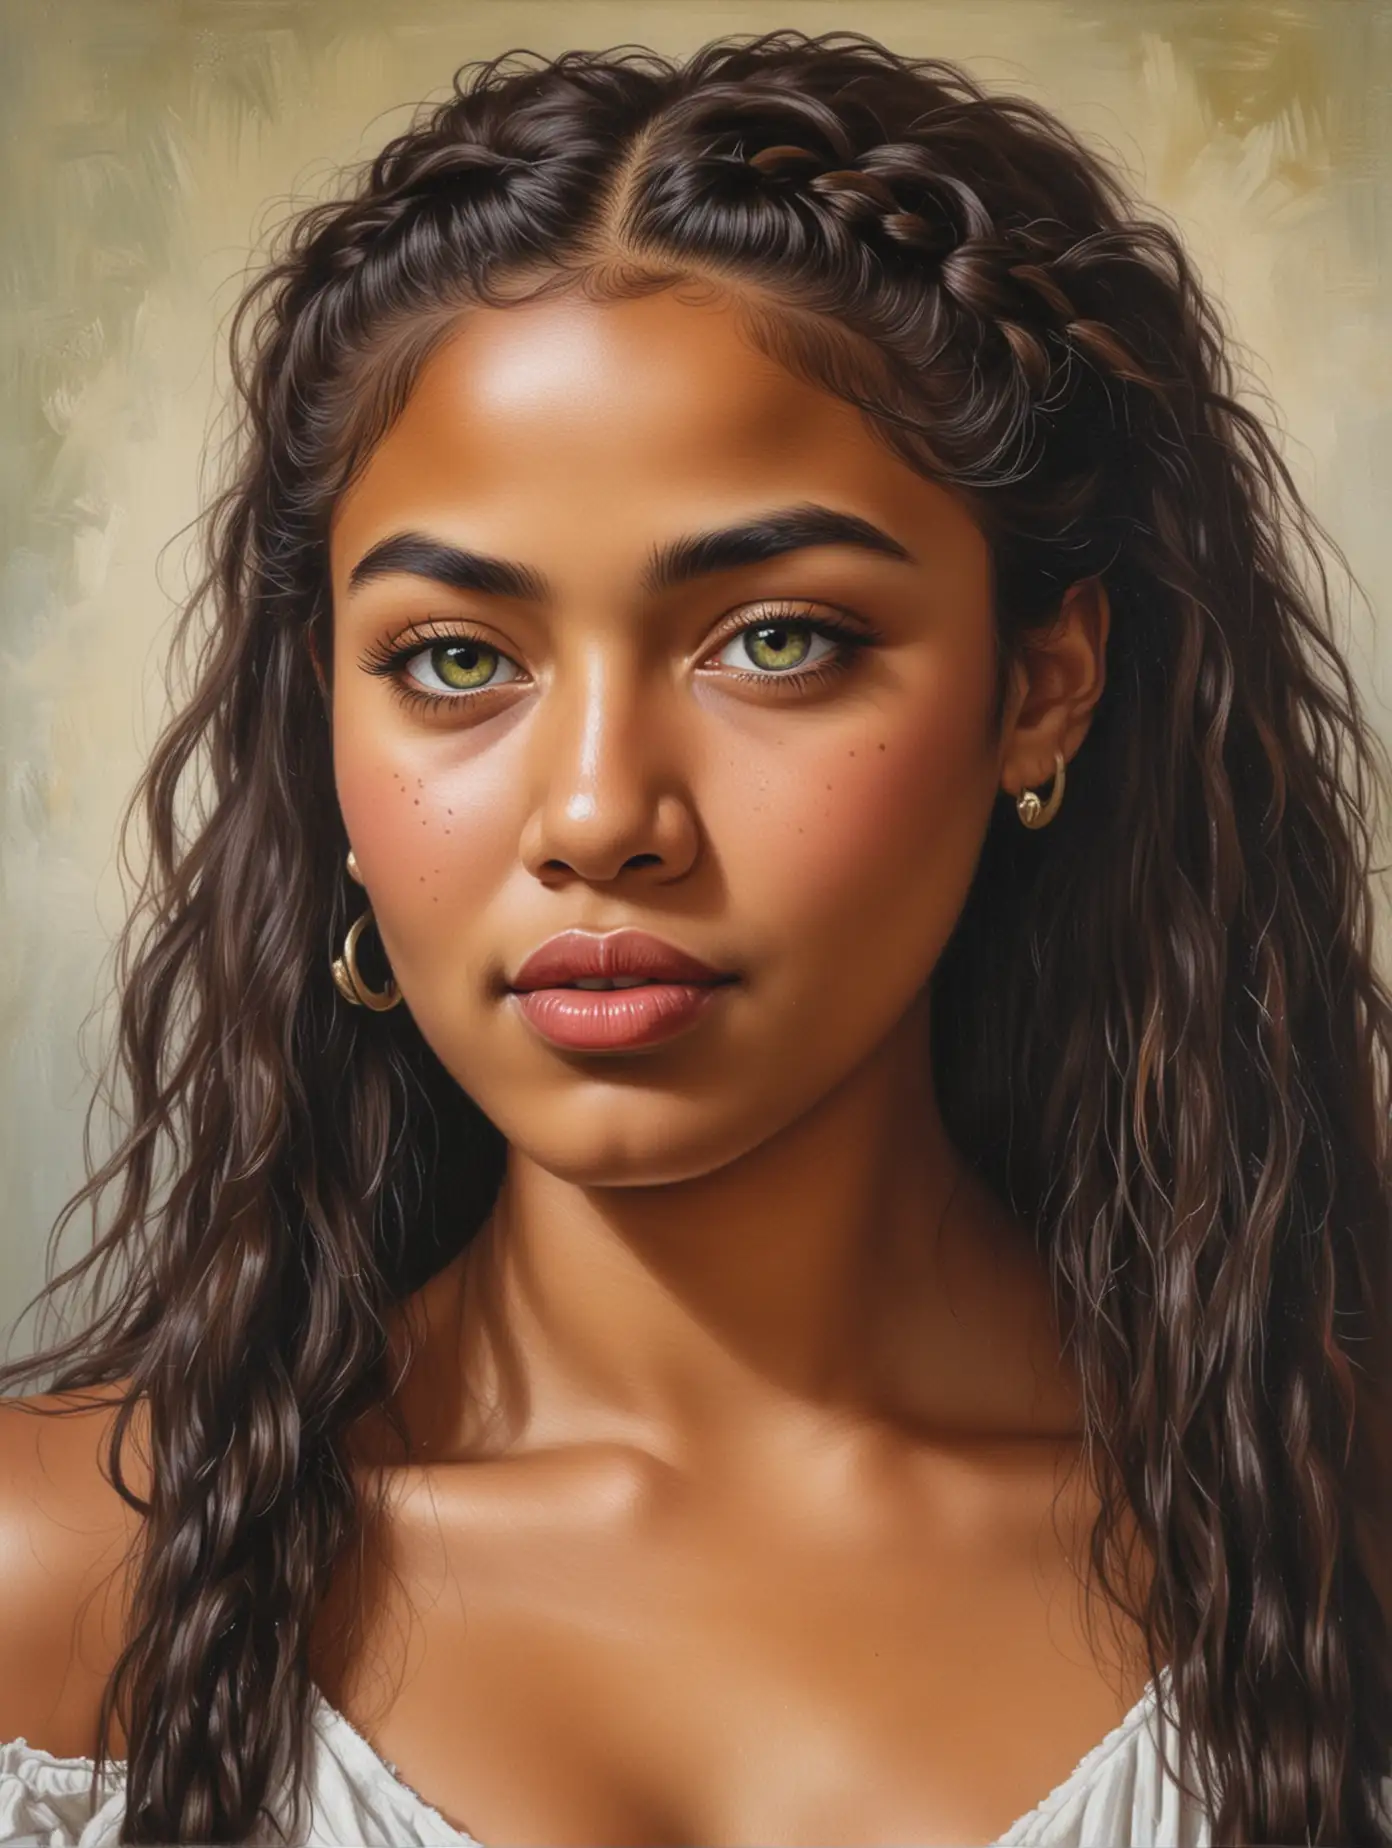 Fijian-Maiden-Portrait-GreenEyed-Beauty-with-Unique-Features